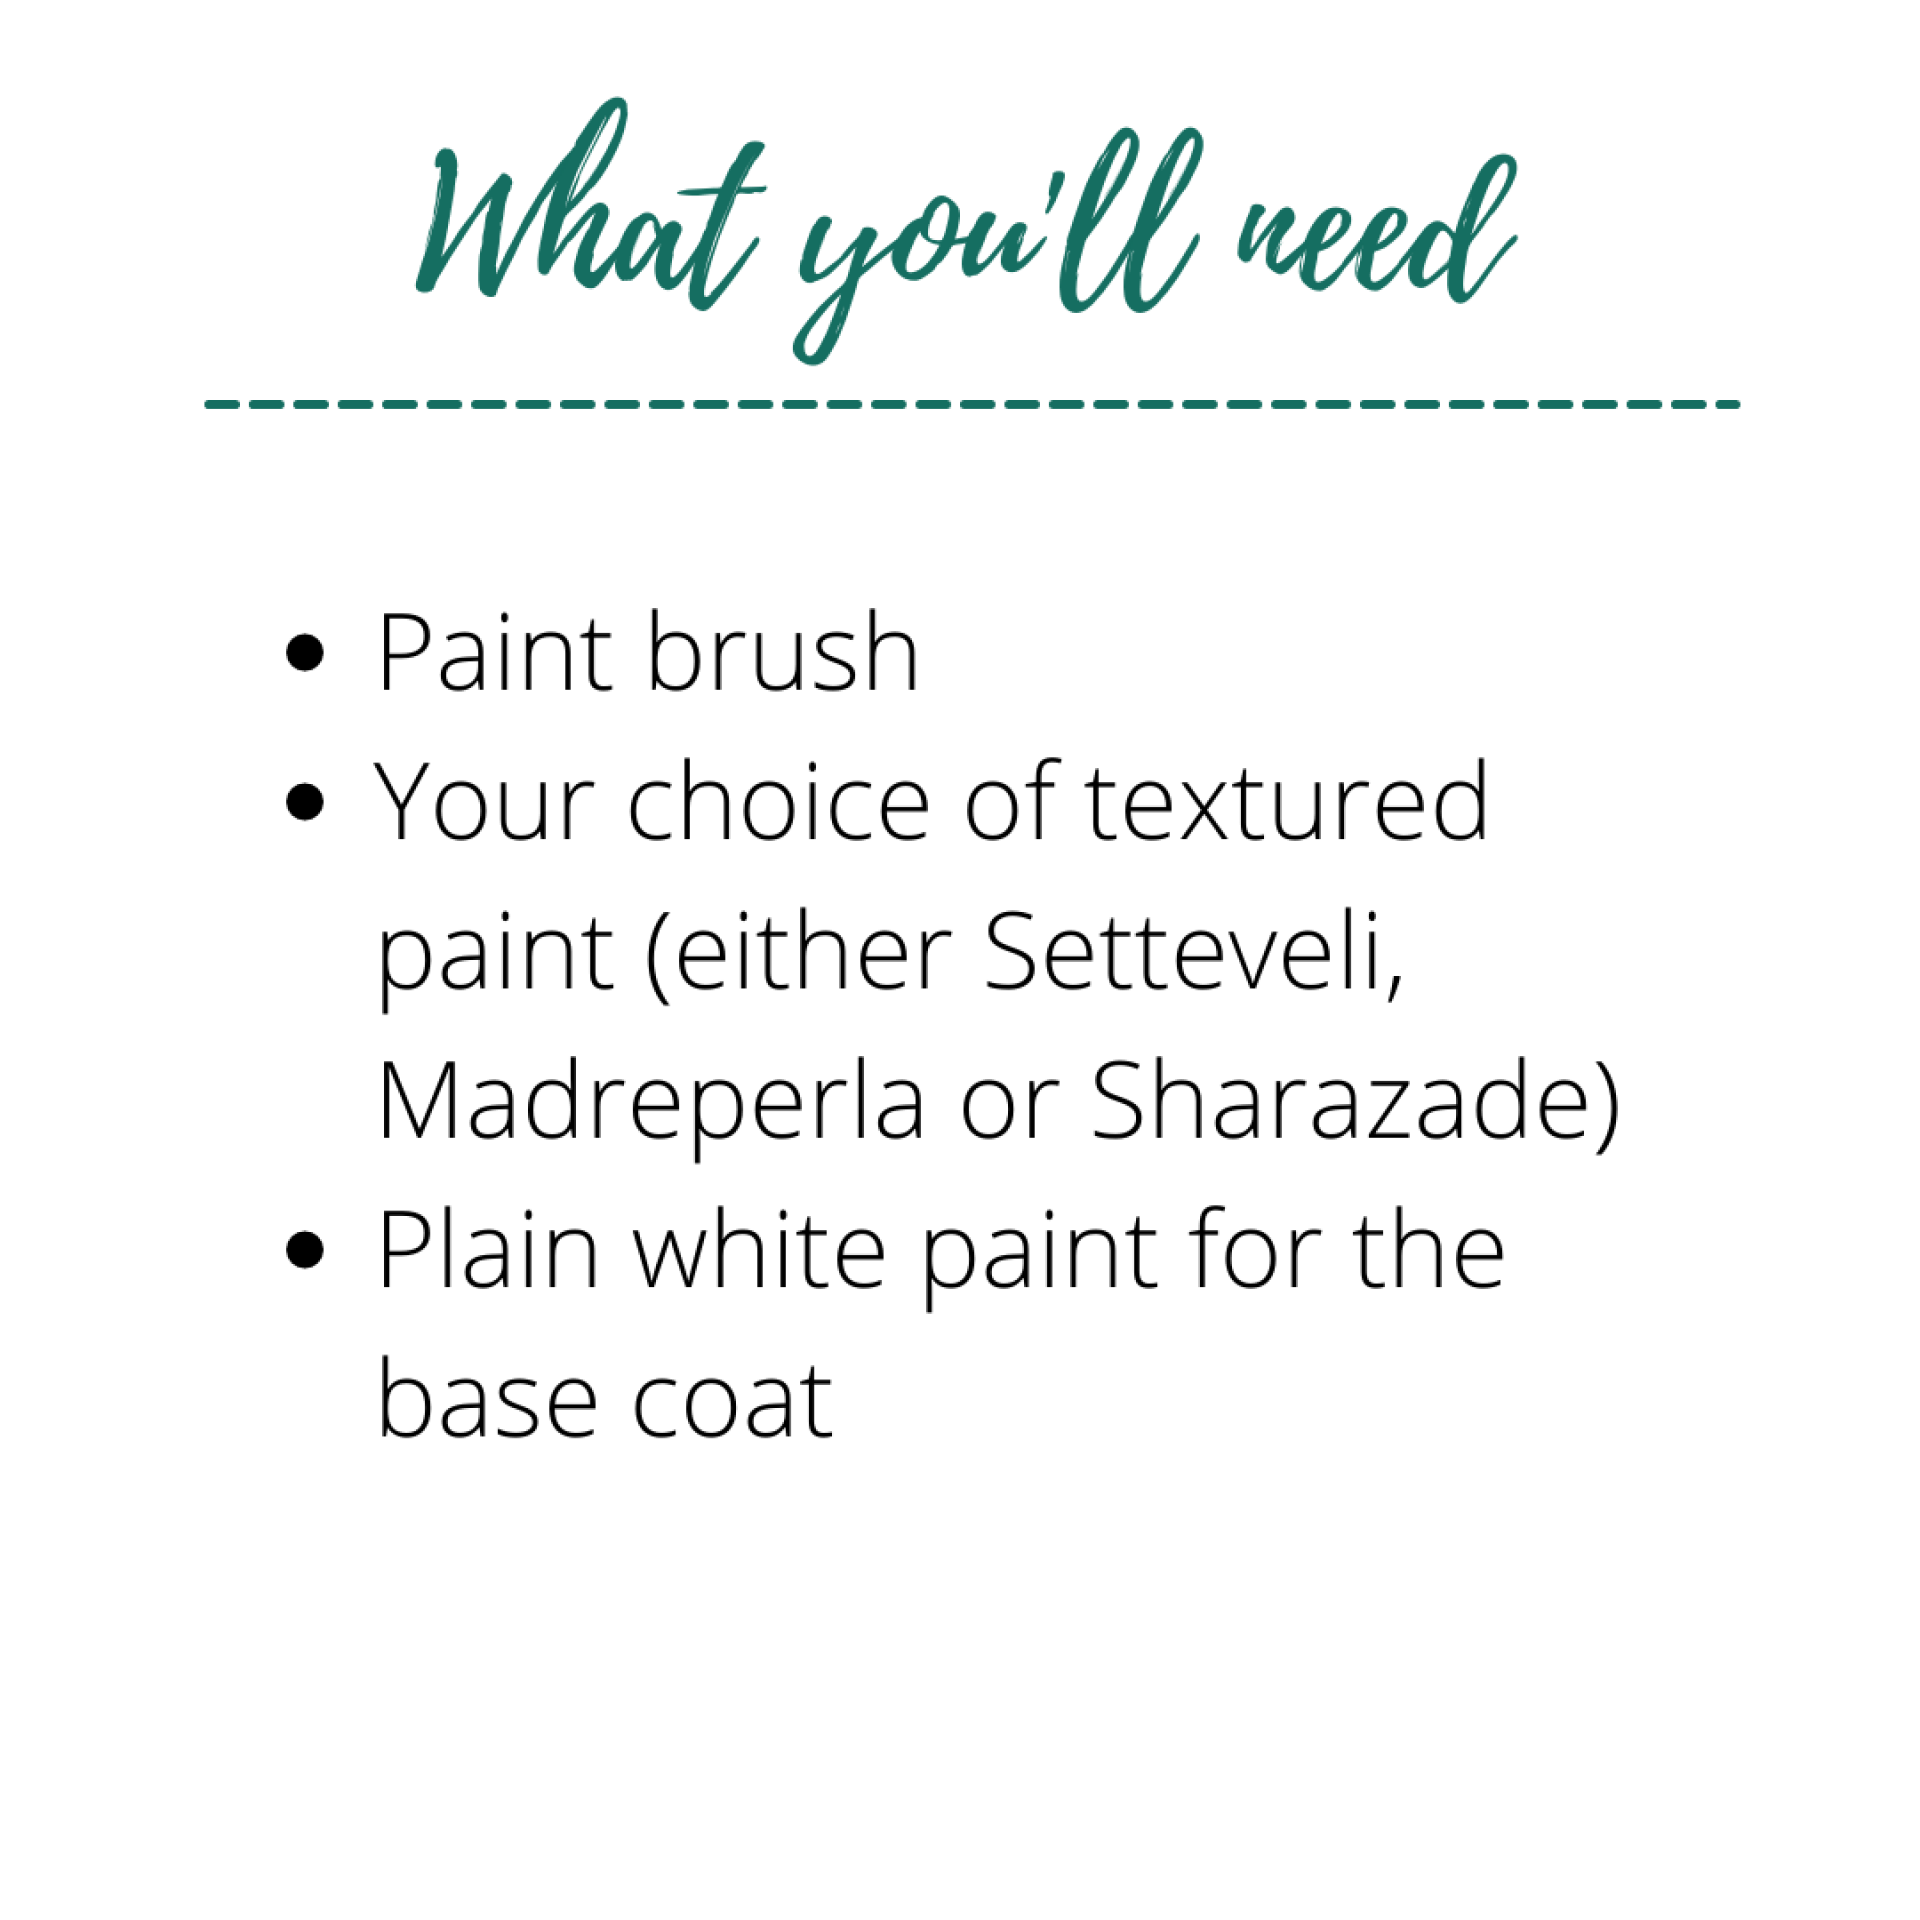 Venetian plaster paint tools needed